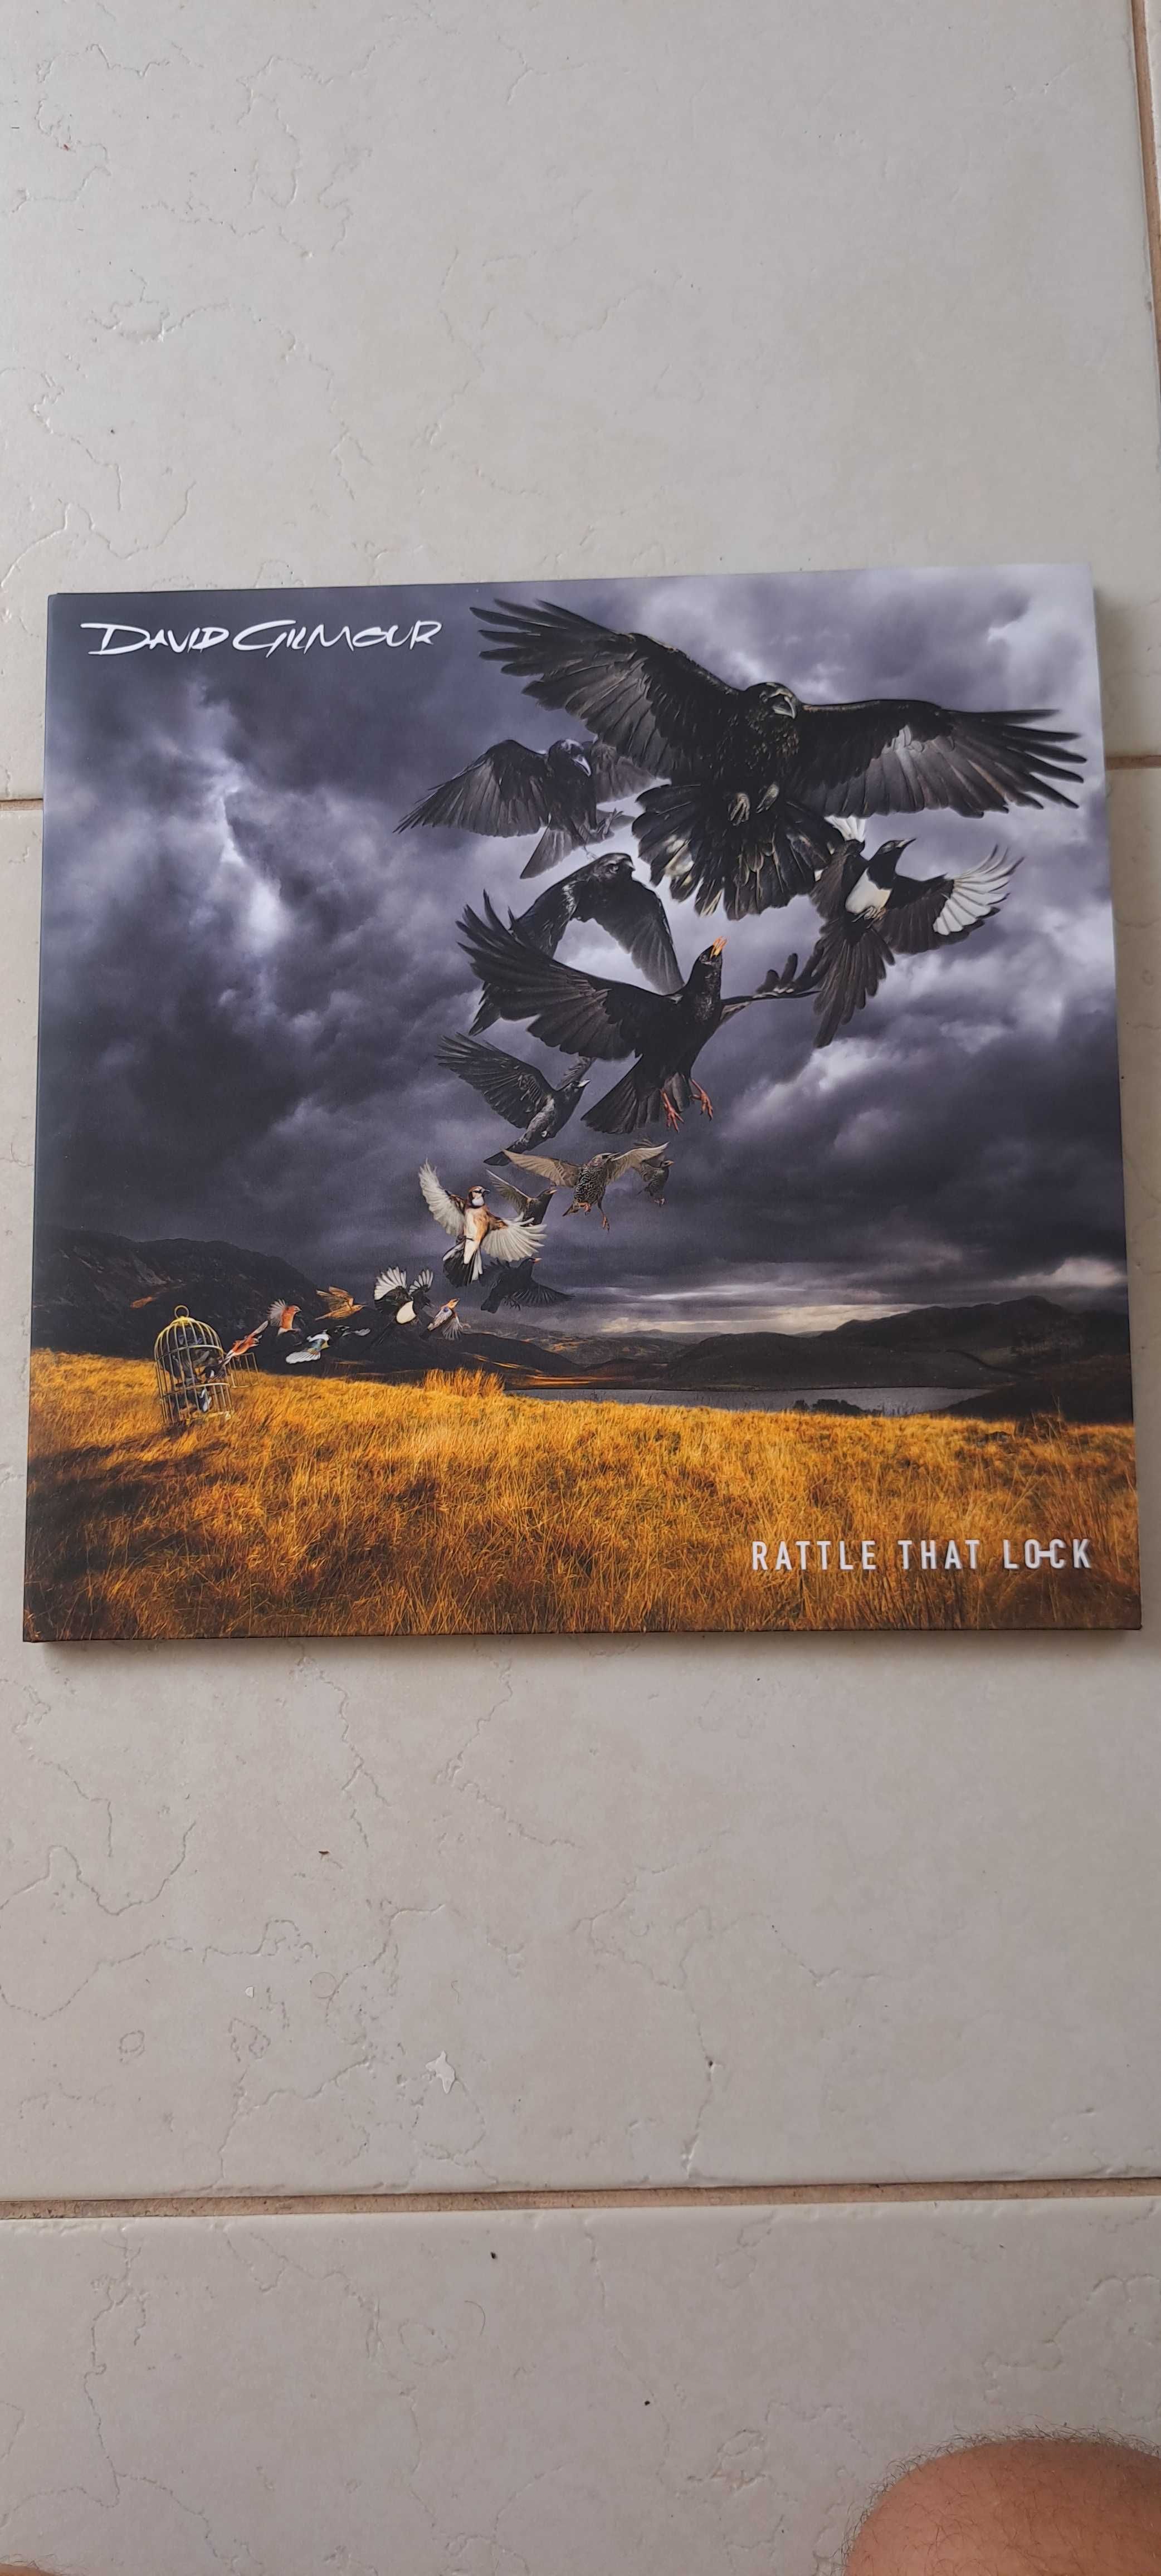 David Gilmour - Rattle that lock, vinyl, 2015